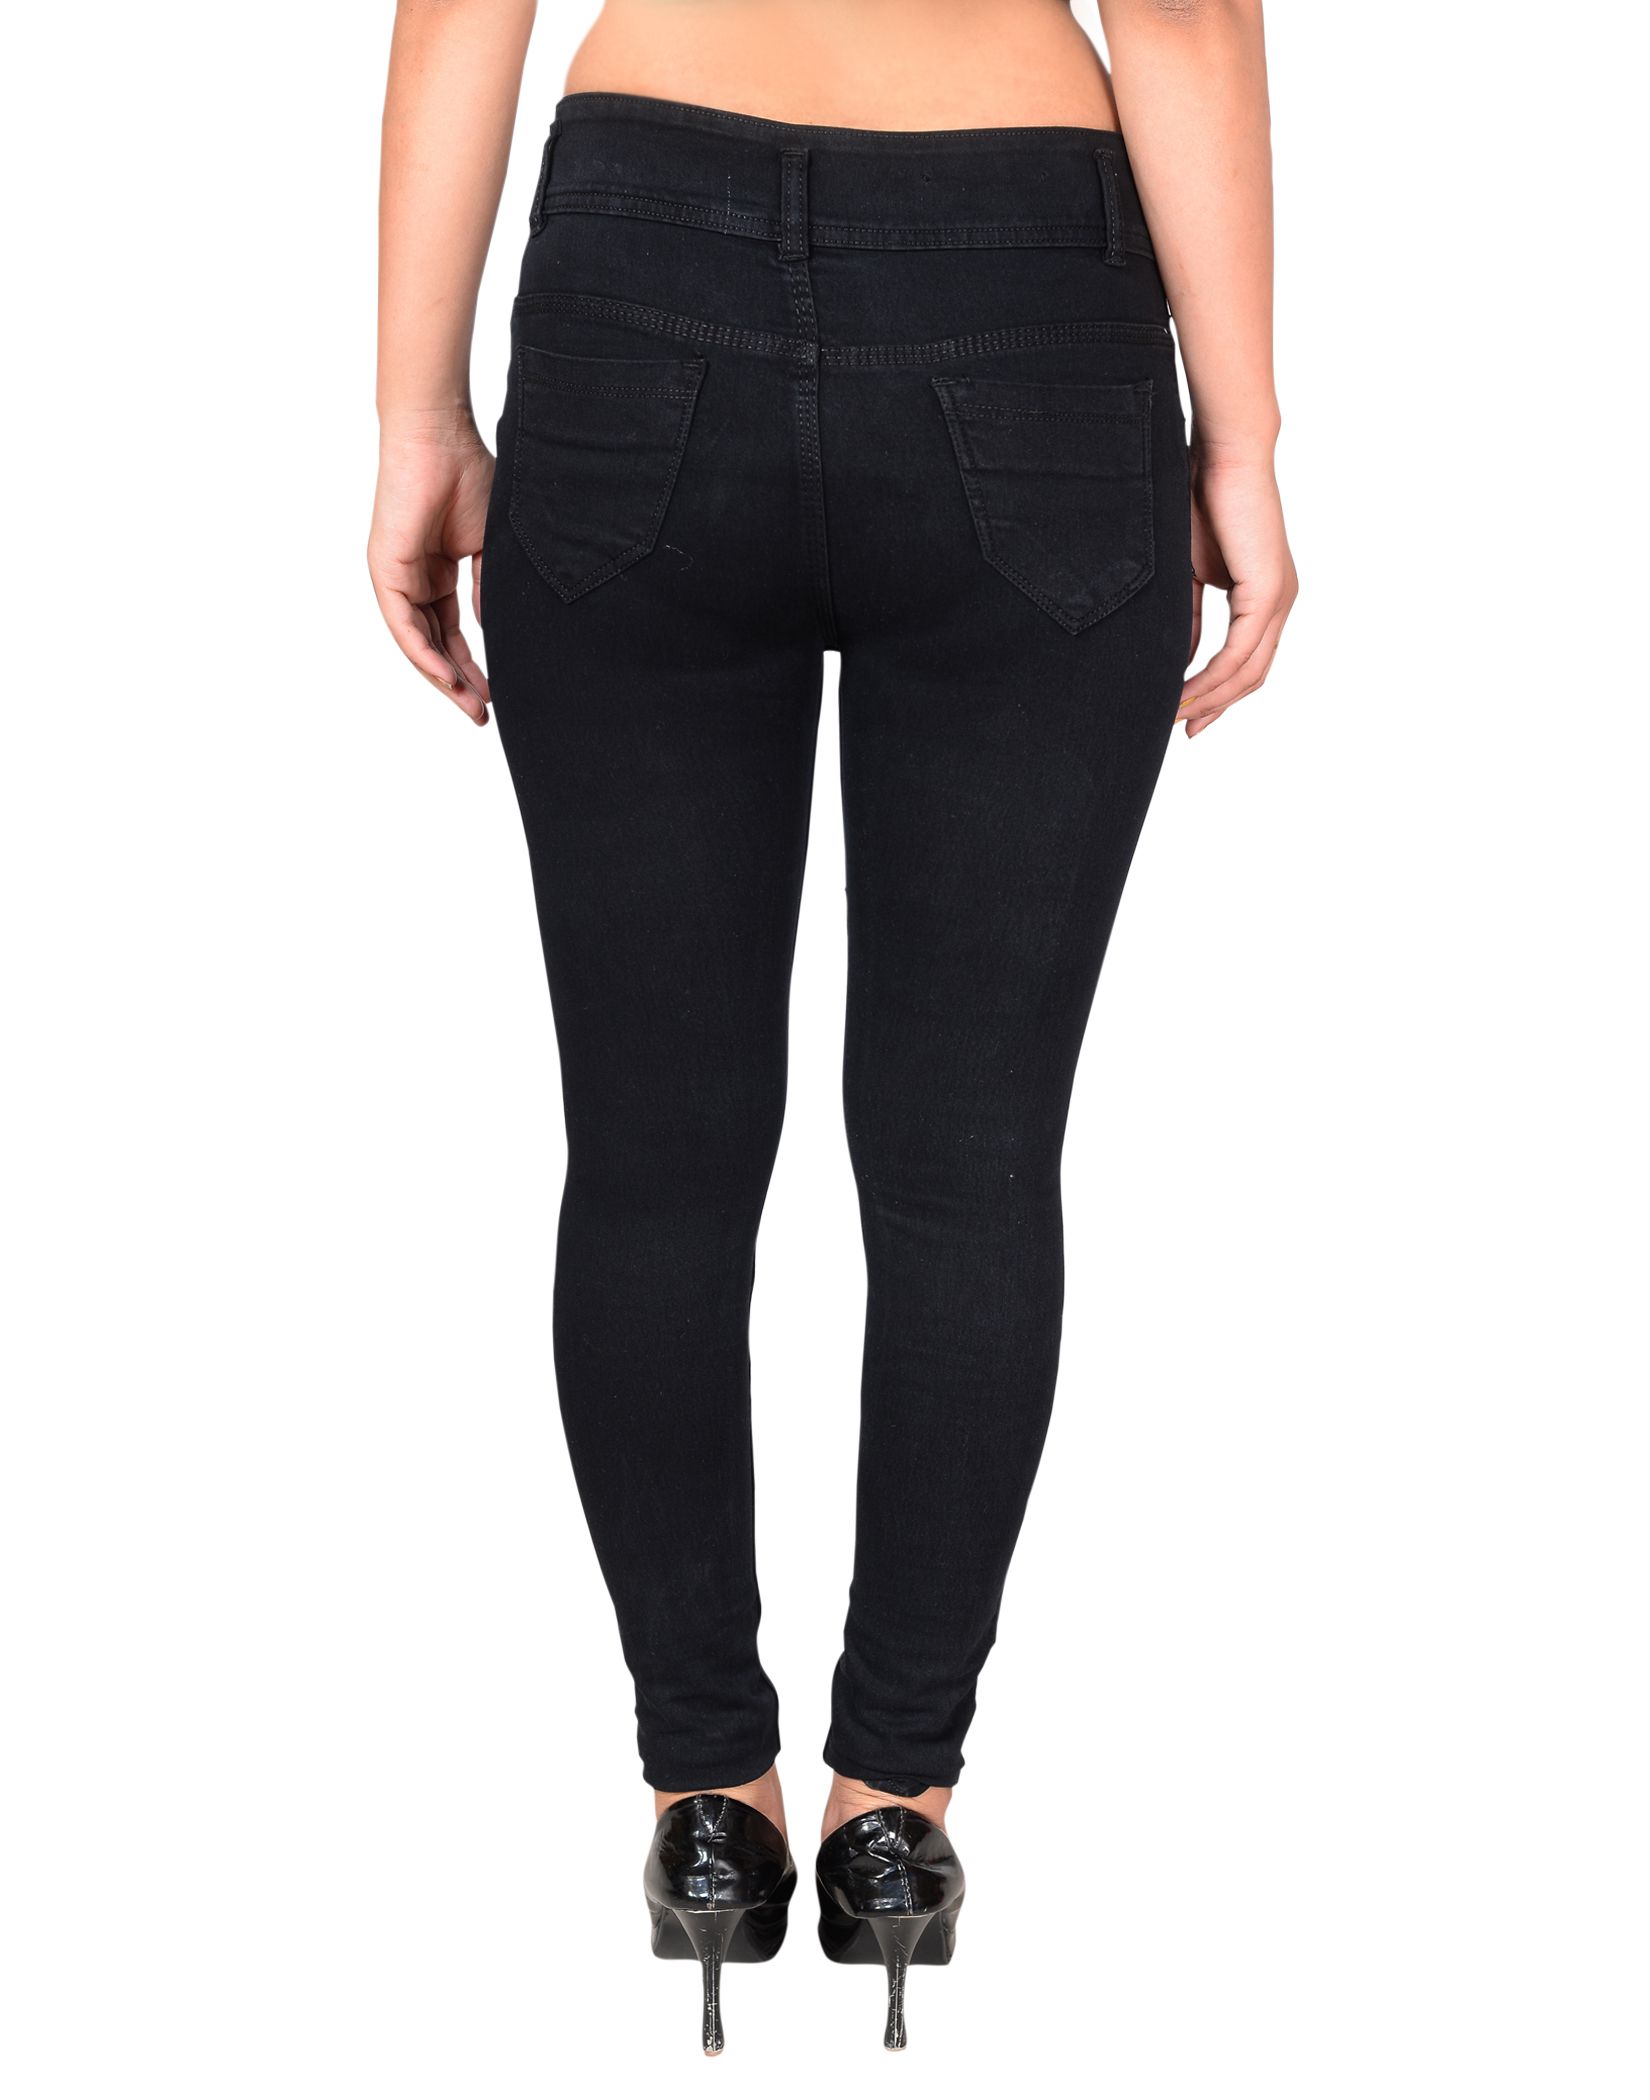 Buy Crazy Girls Denim Jeans - Black Online at Best Prices in India ...